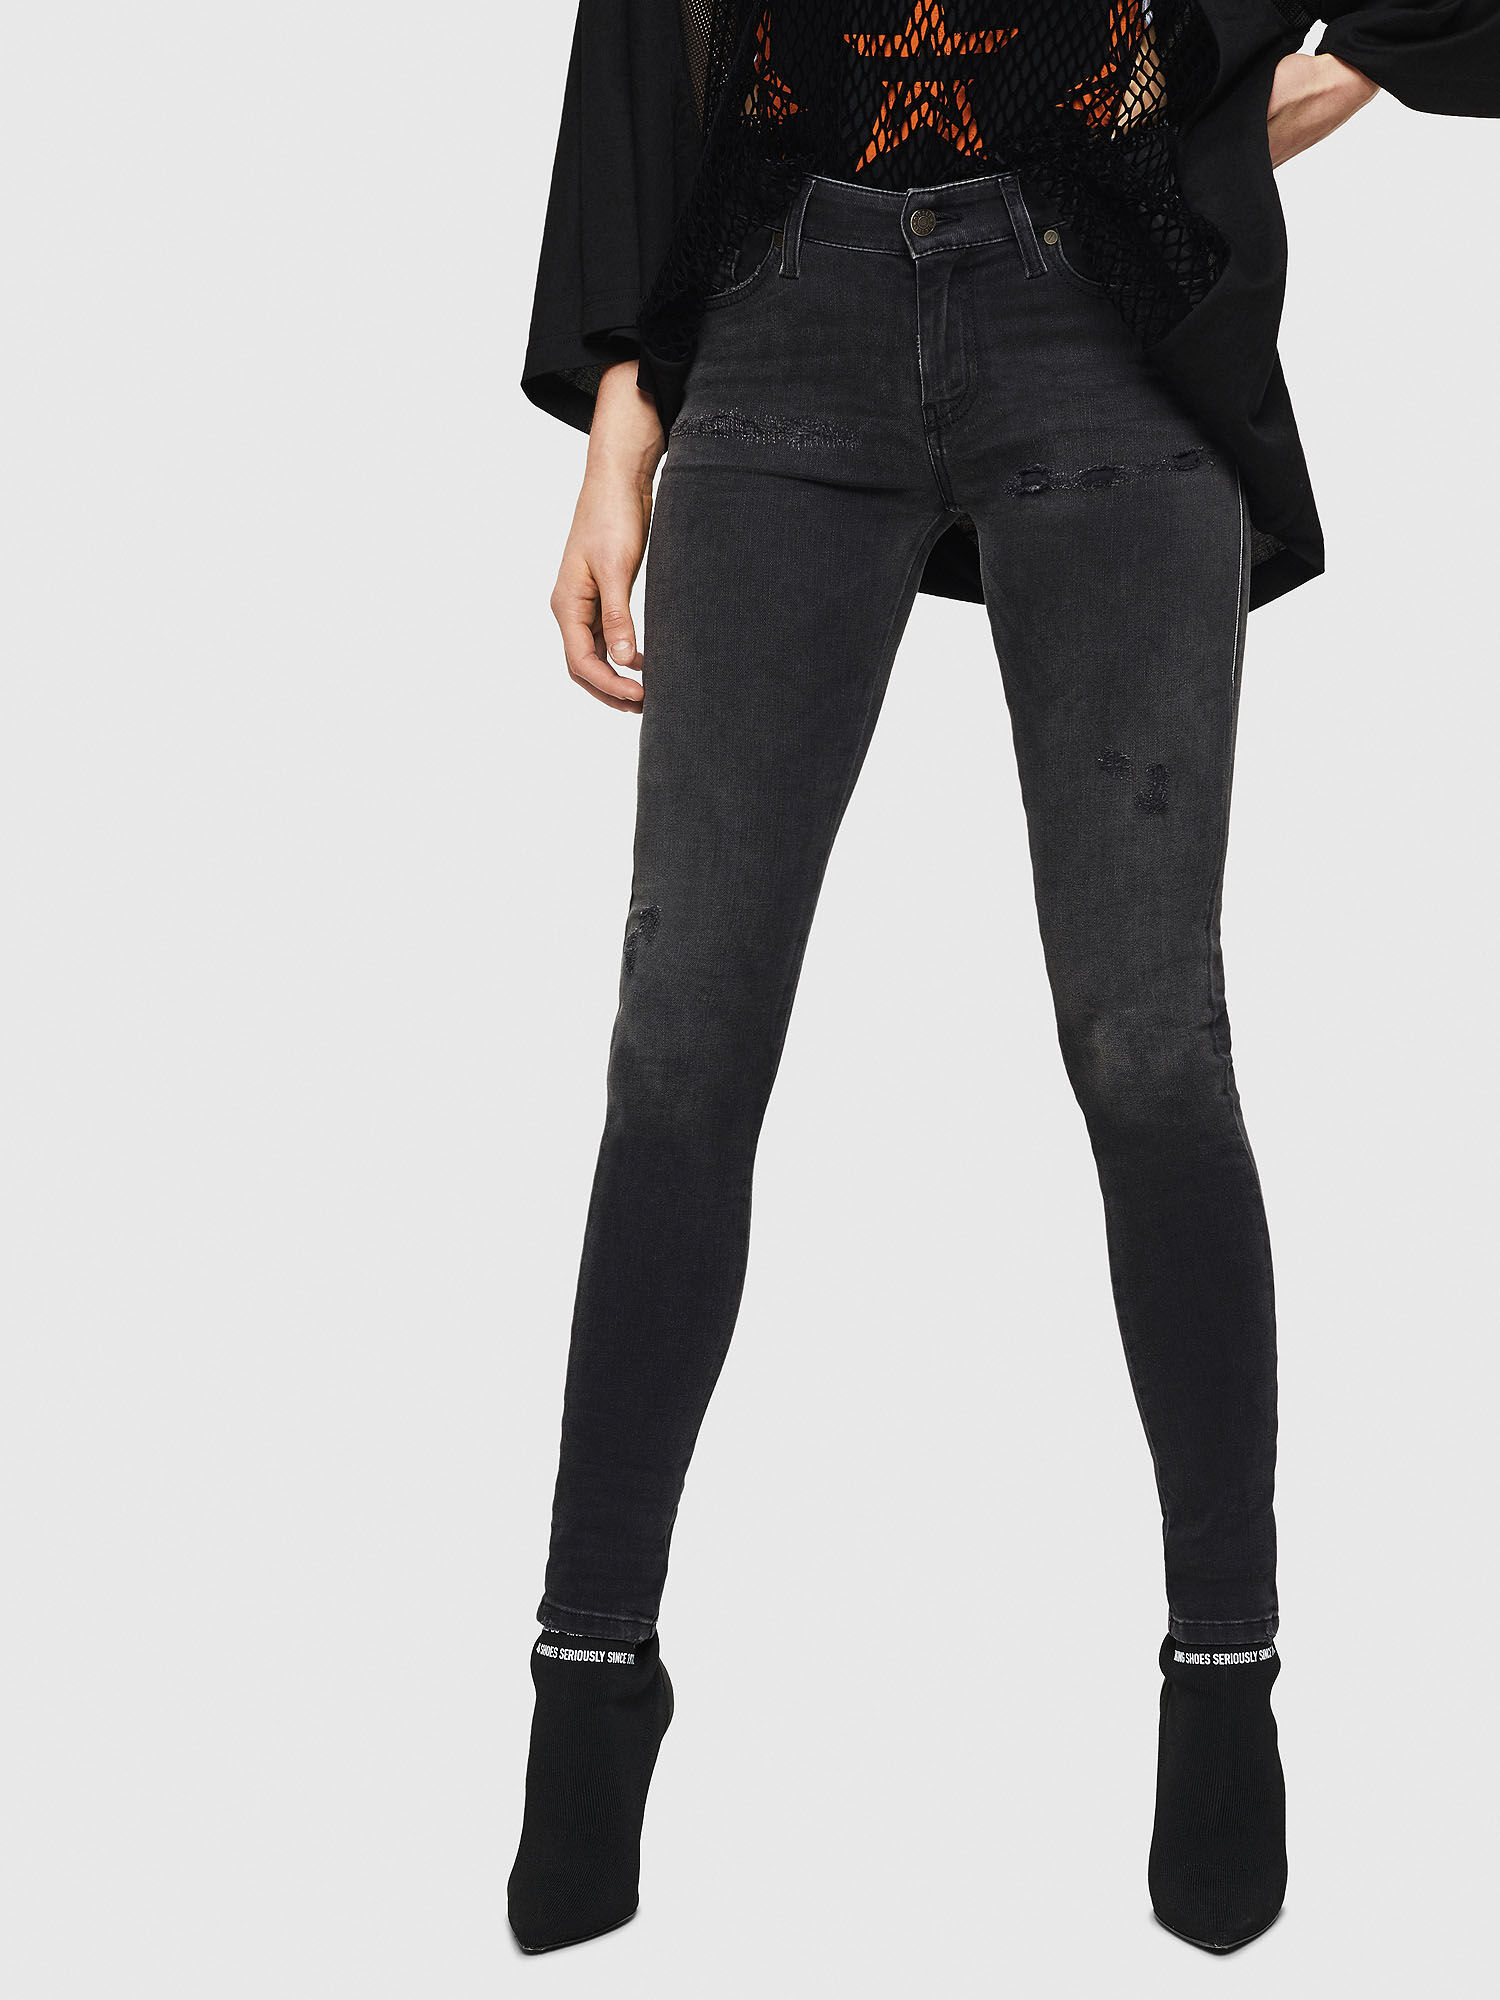 grey super skinny jeans womens